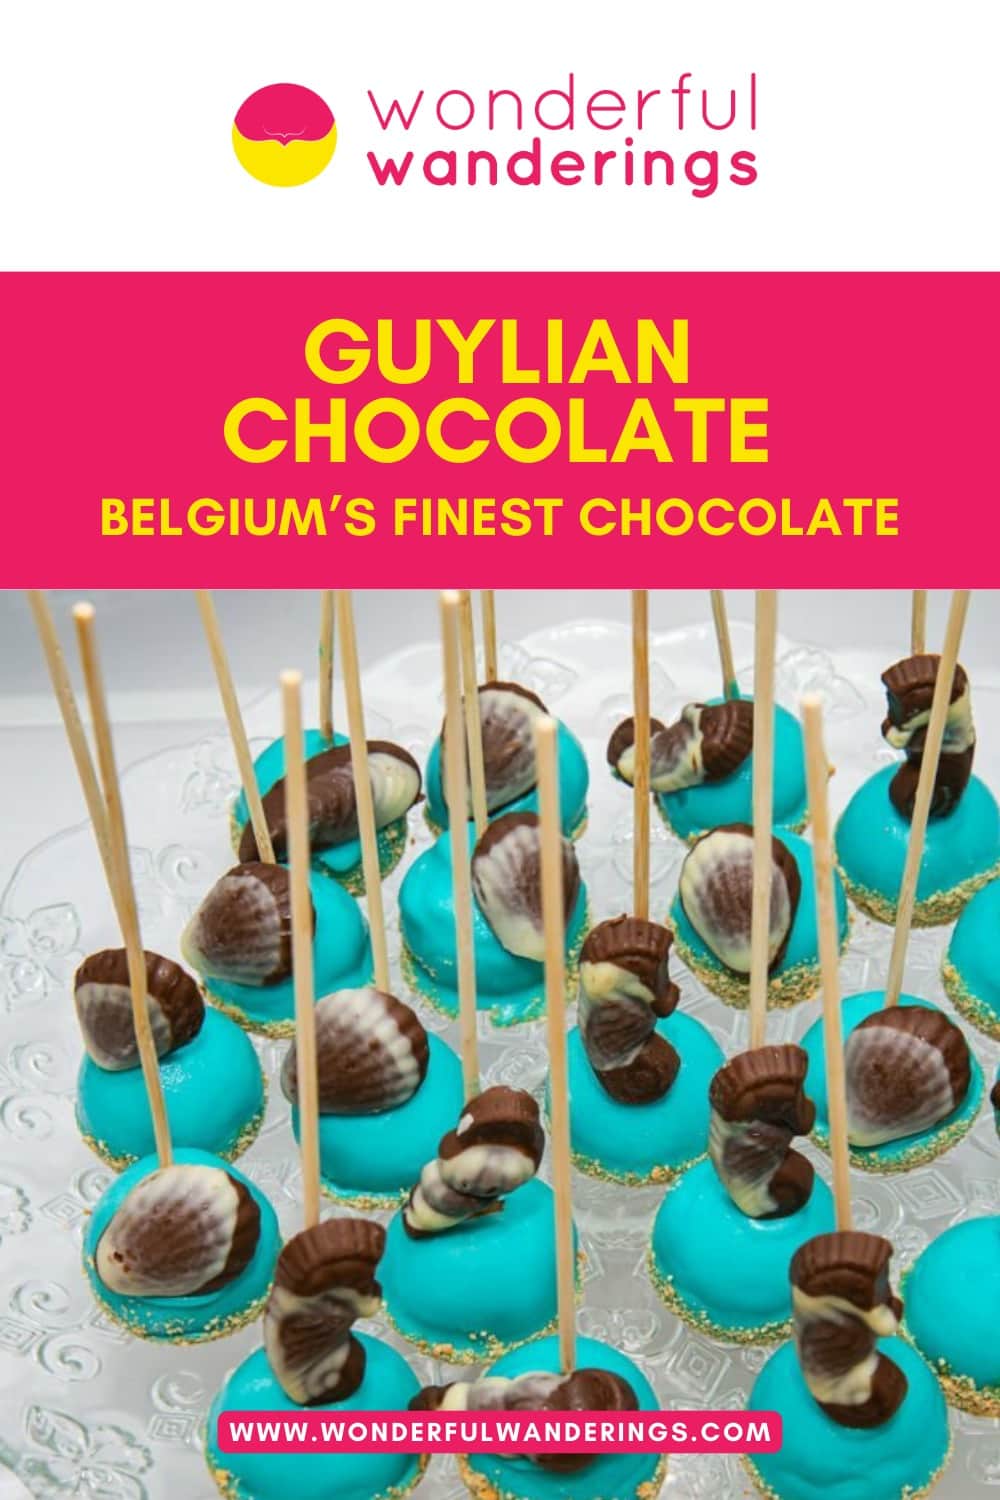 Guylian chocolate - Wonderful Wanderings Pin